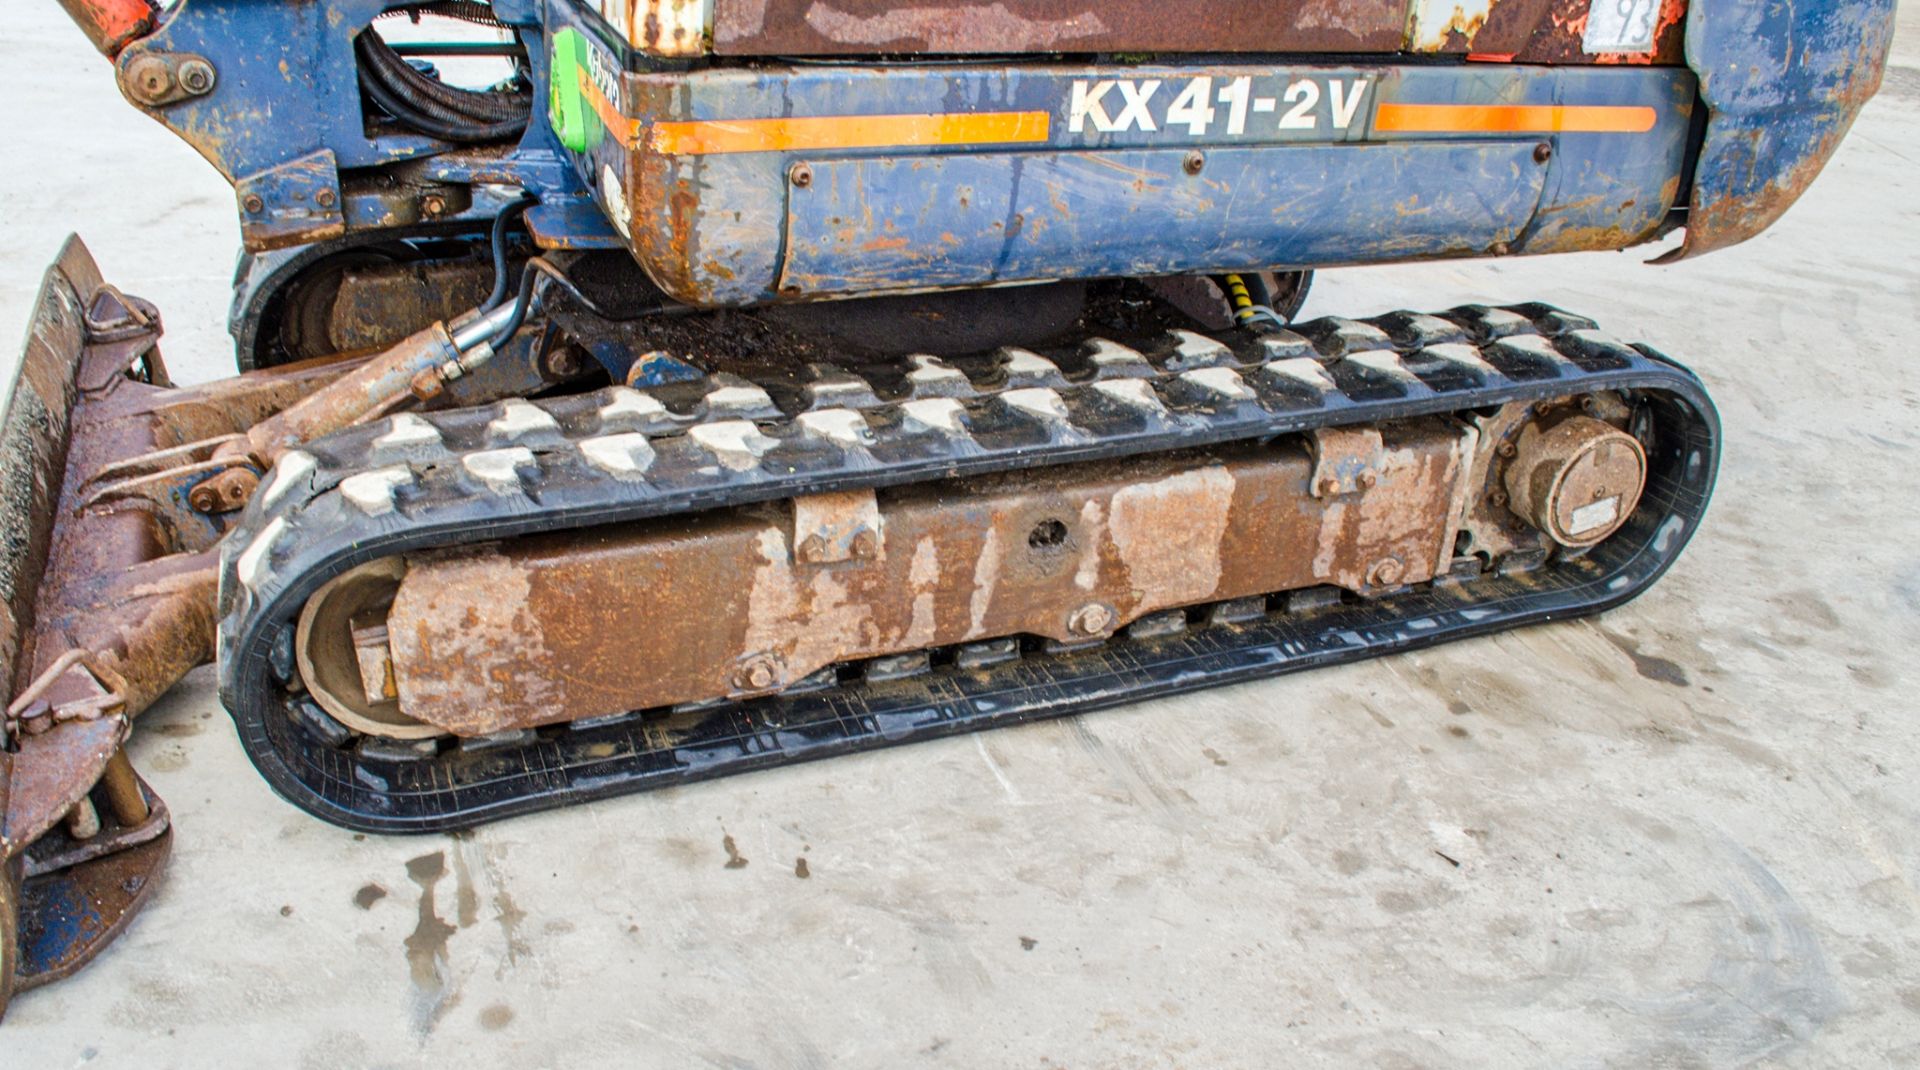 Kubota KX41-2v 1.6 tonne rubber tracked mini excavator Year: 2004 S/N: 7055077 Recorded Hours: - Image 9 of 23